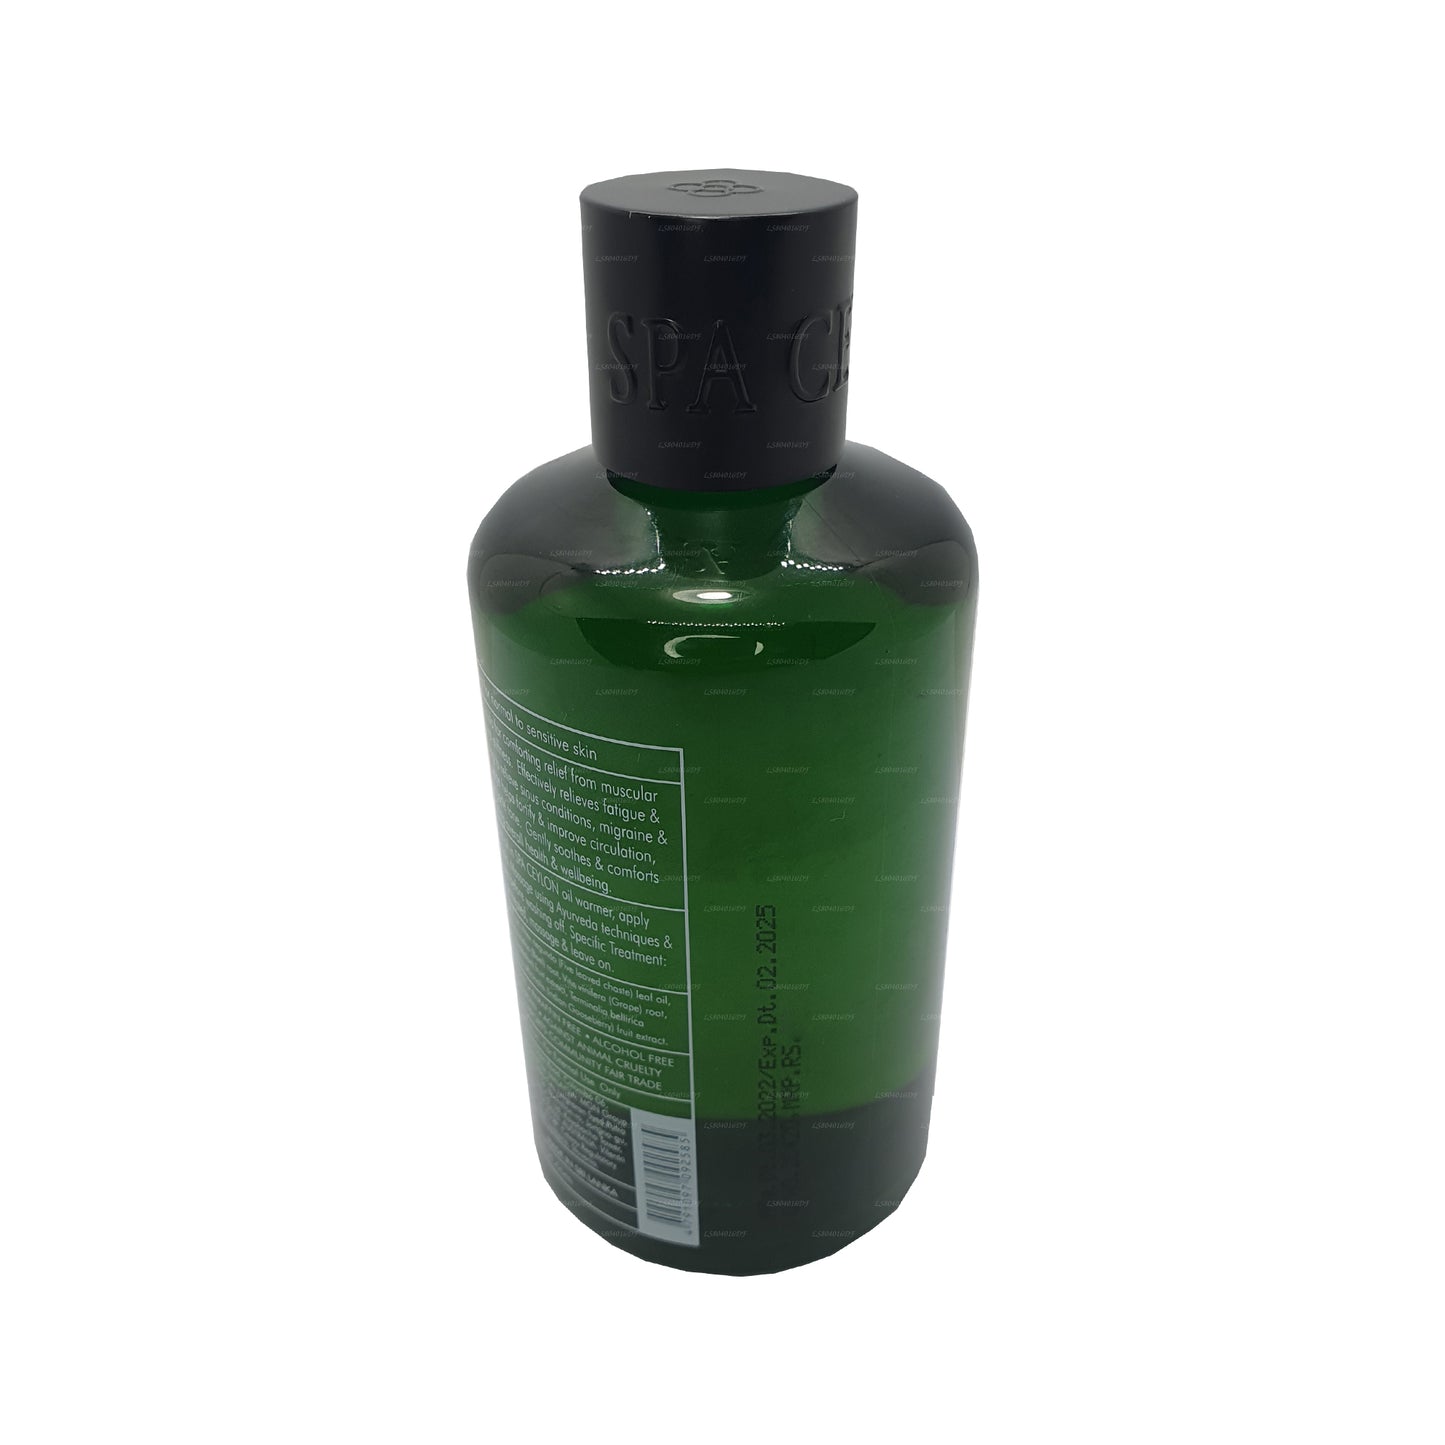 Spa Ceylon Ksheerabala - ošetřující olej (250ml)